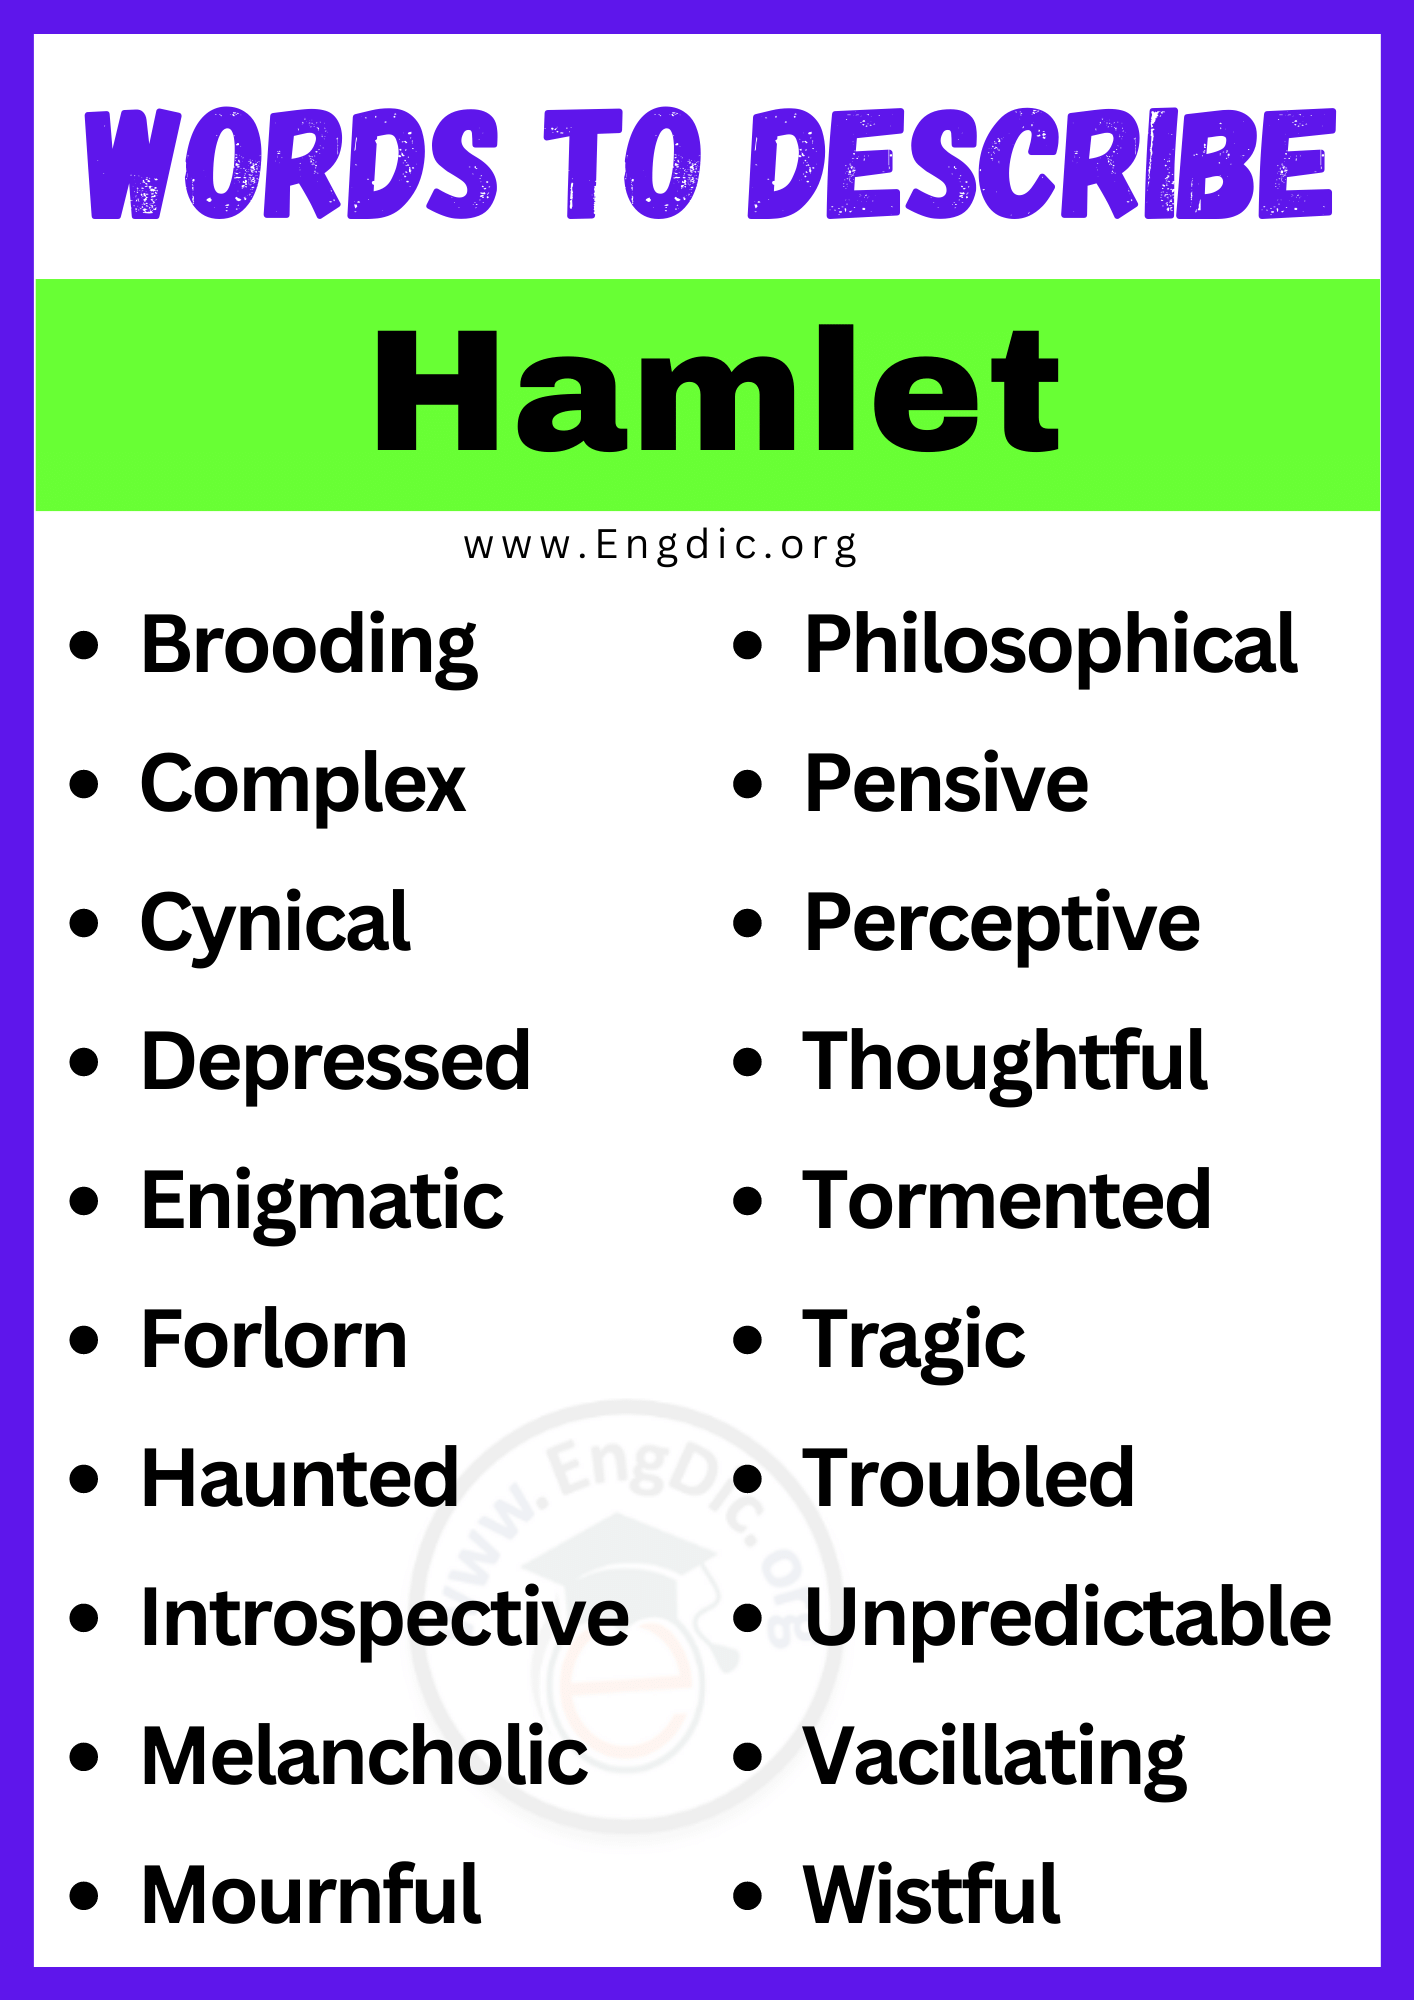 Words to Describe Hamlet